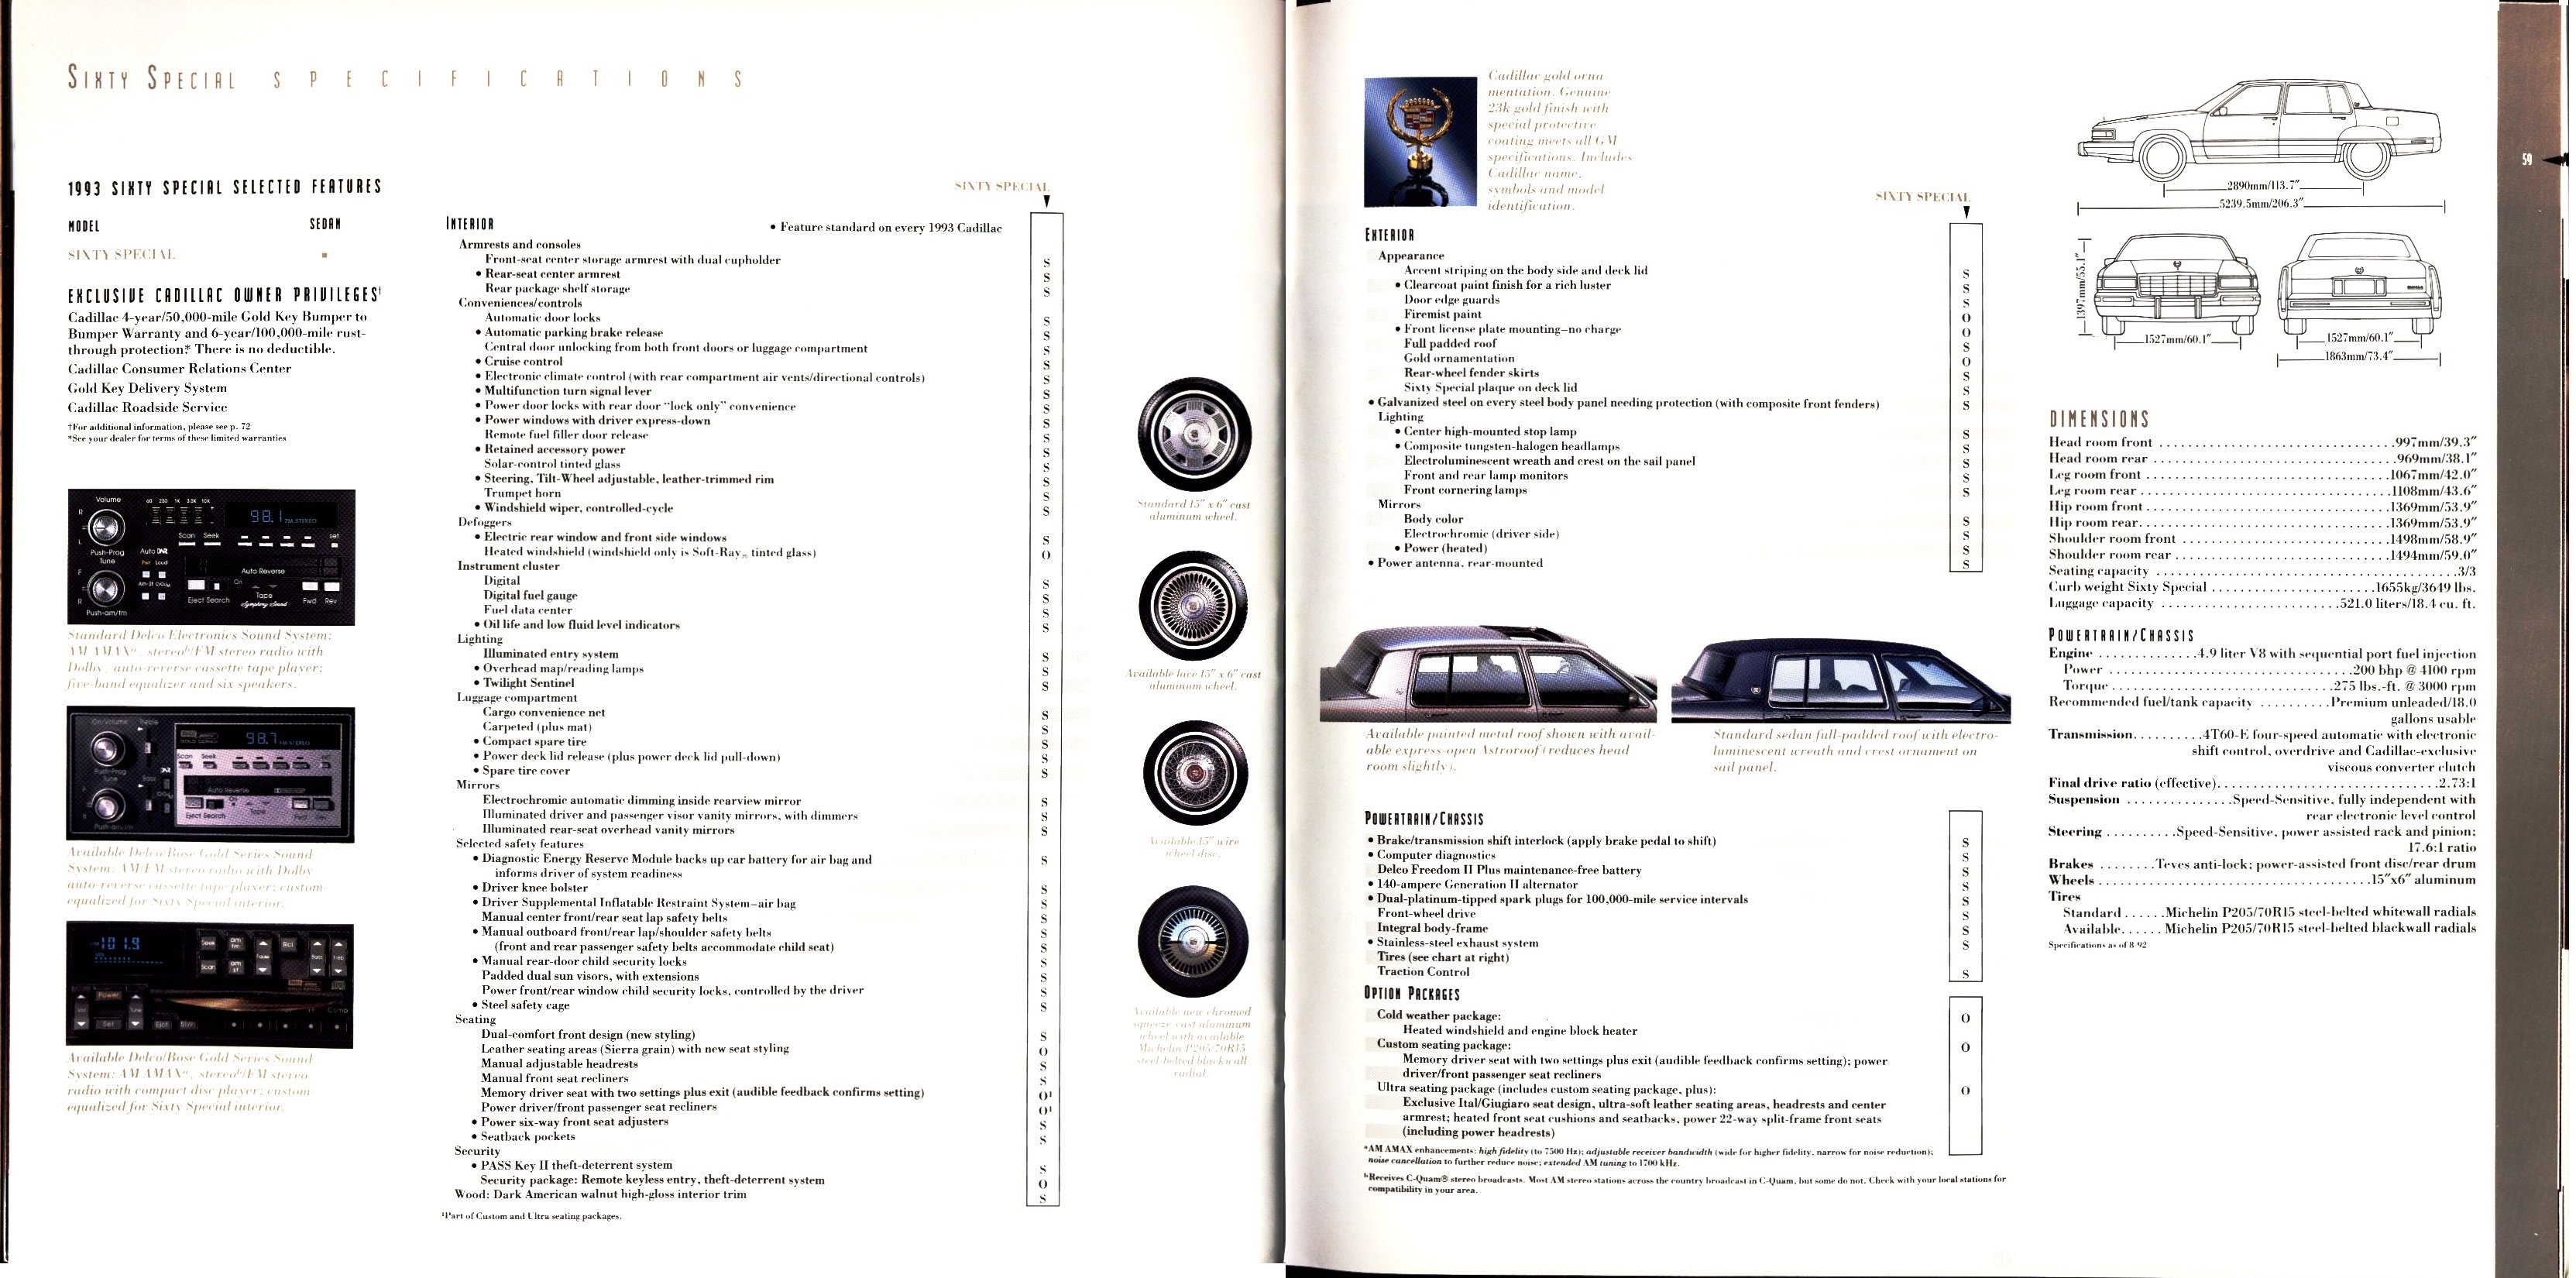 1993 Cadillac Full Line Prestige Brochure 58-59